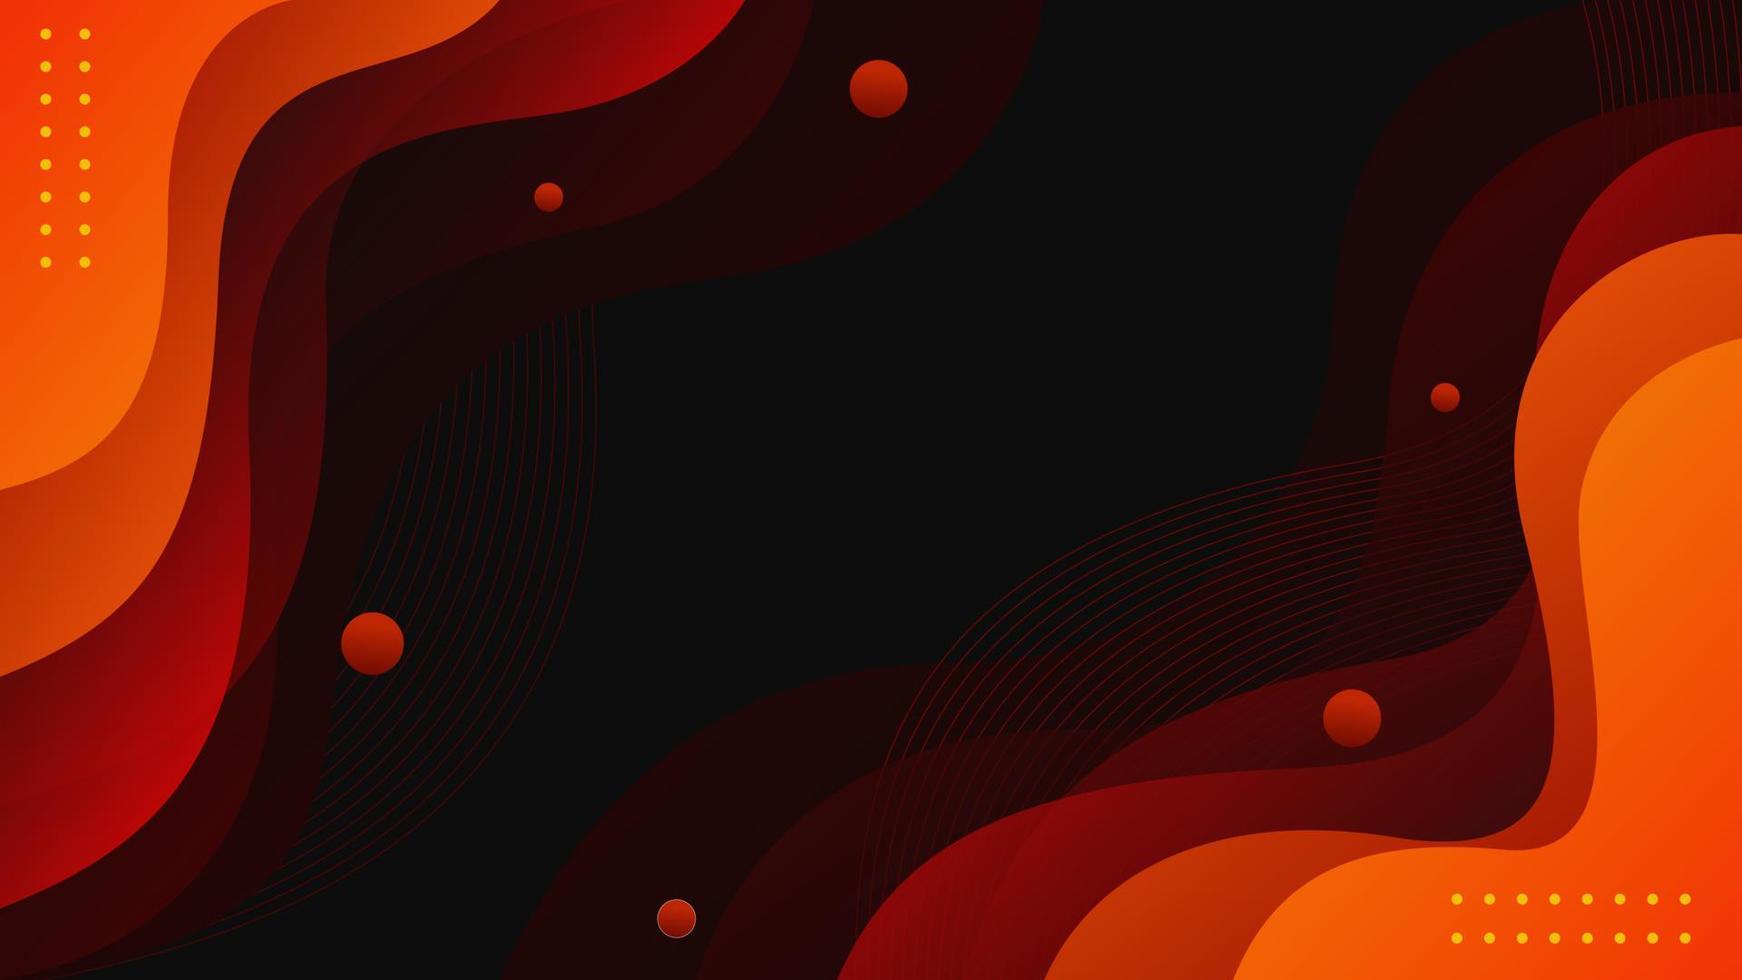 diseño de fondo abstracto líquido degradado. fondo oscuro con formas onduladas de fluido naranja. diseño vectorial futurista vector